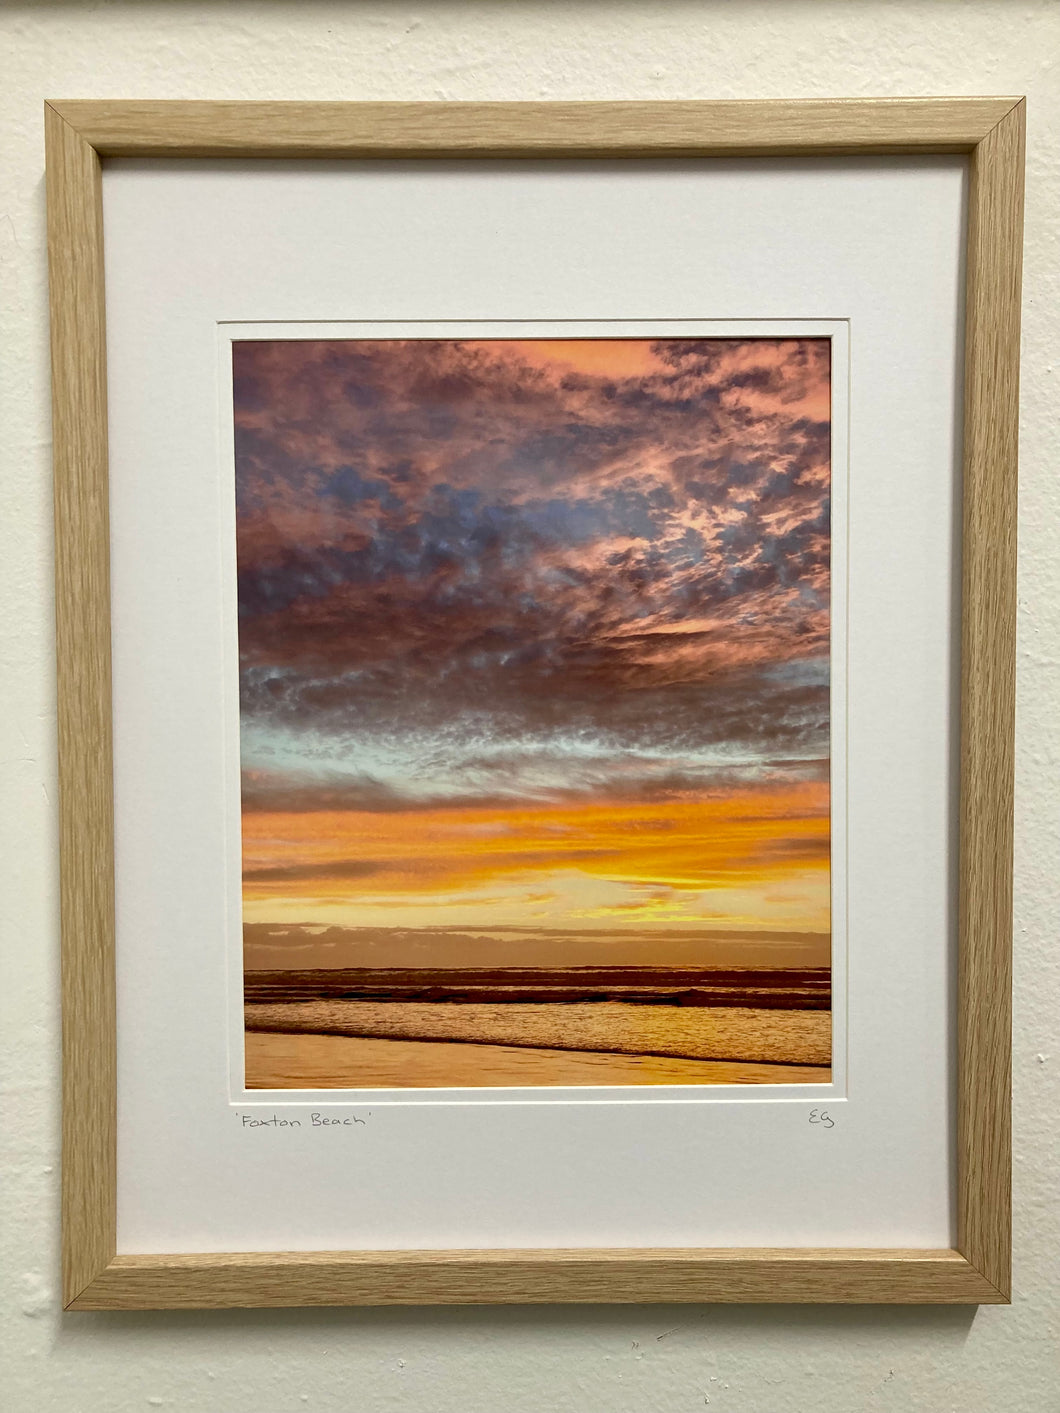 Cotton Candy Skies, Foxton Beach - Framed Print